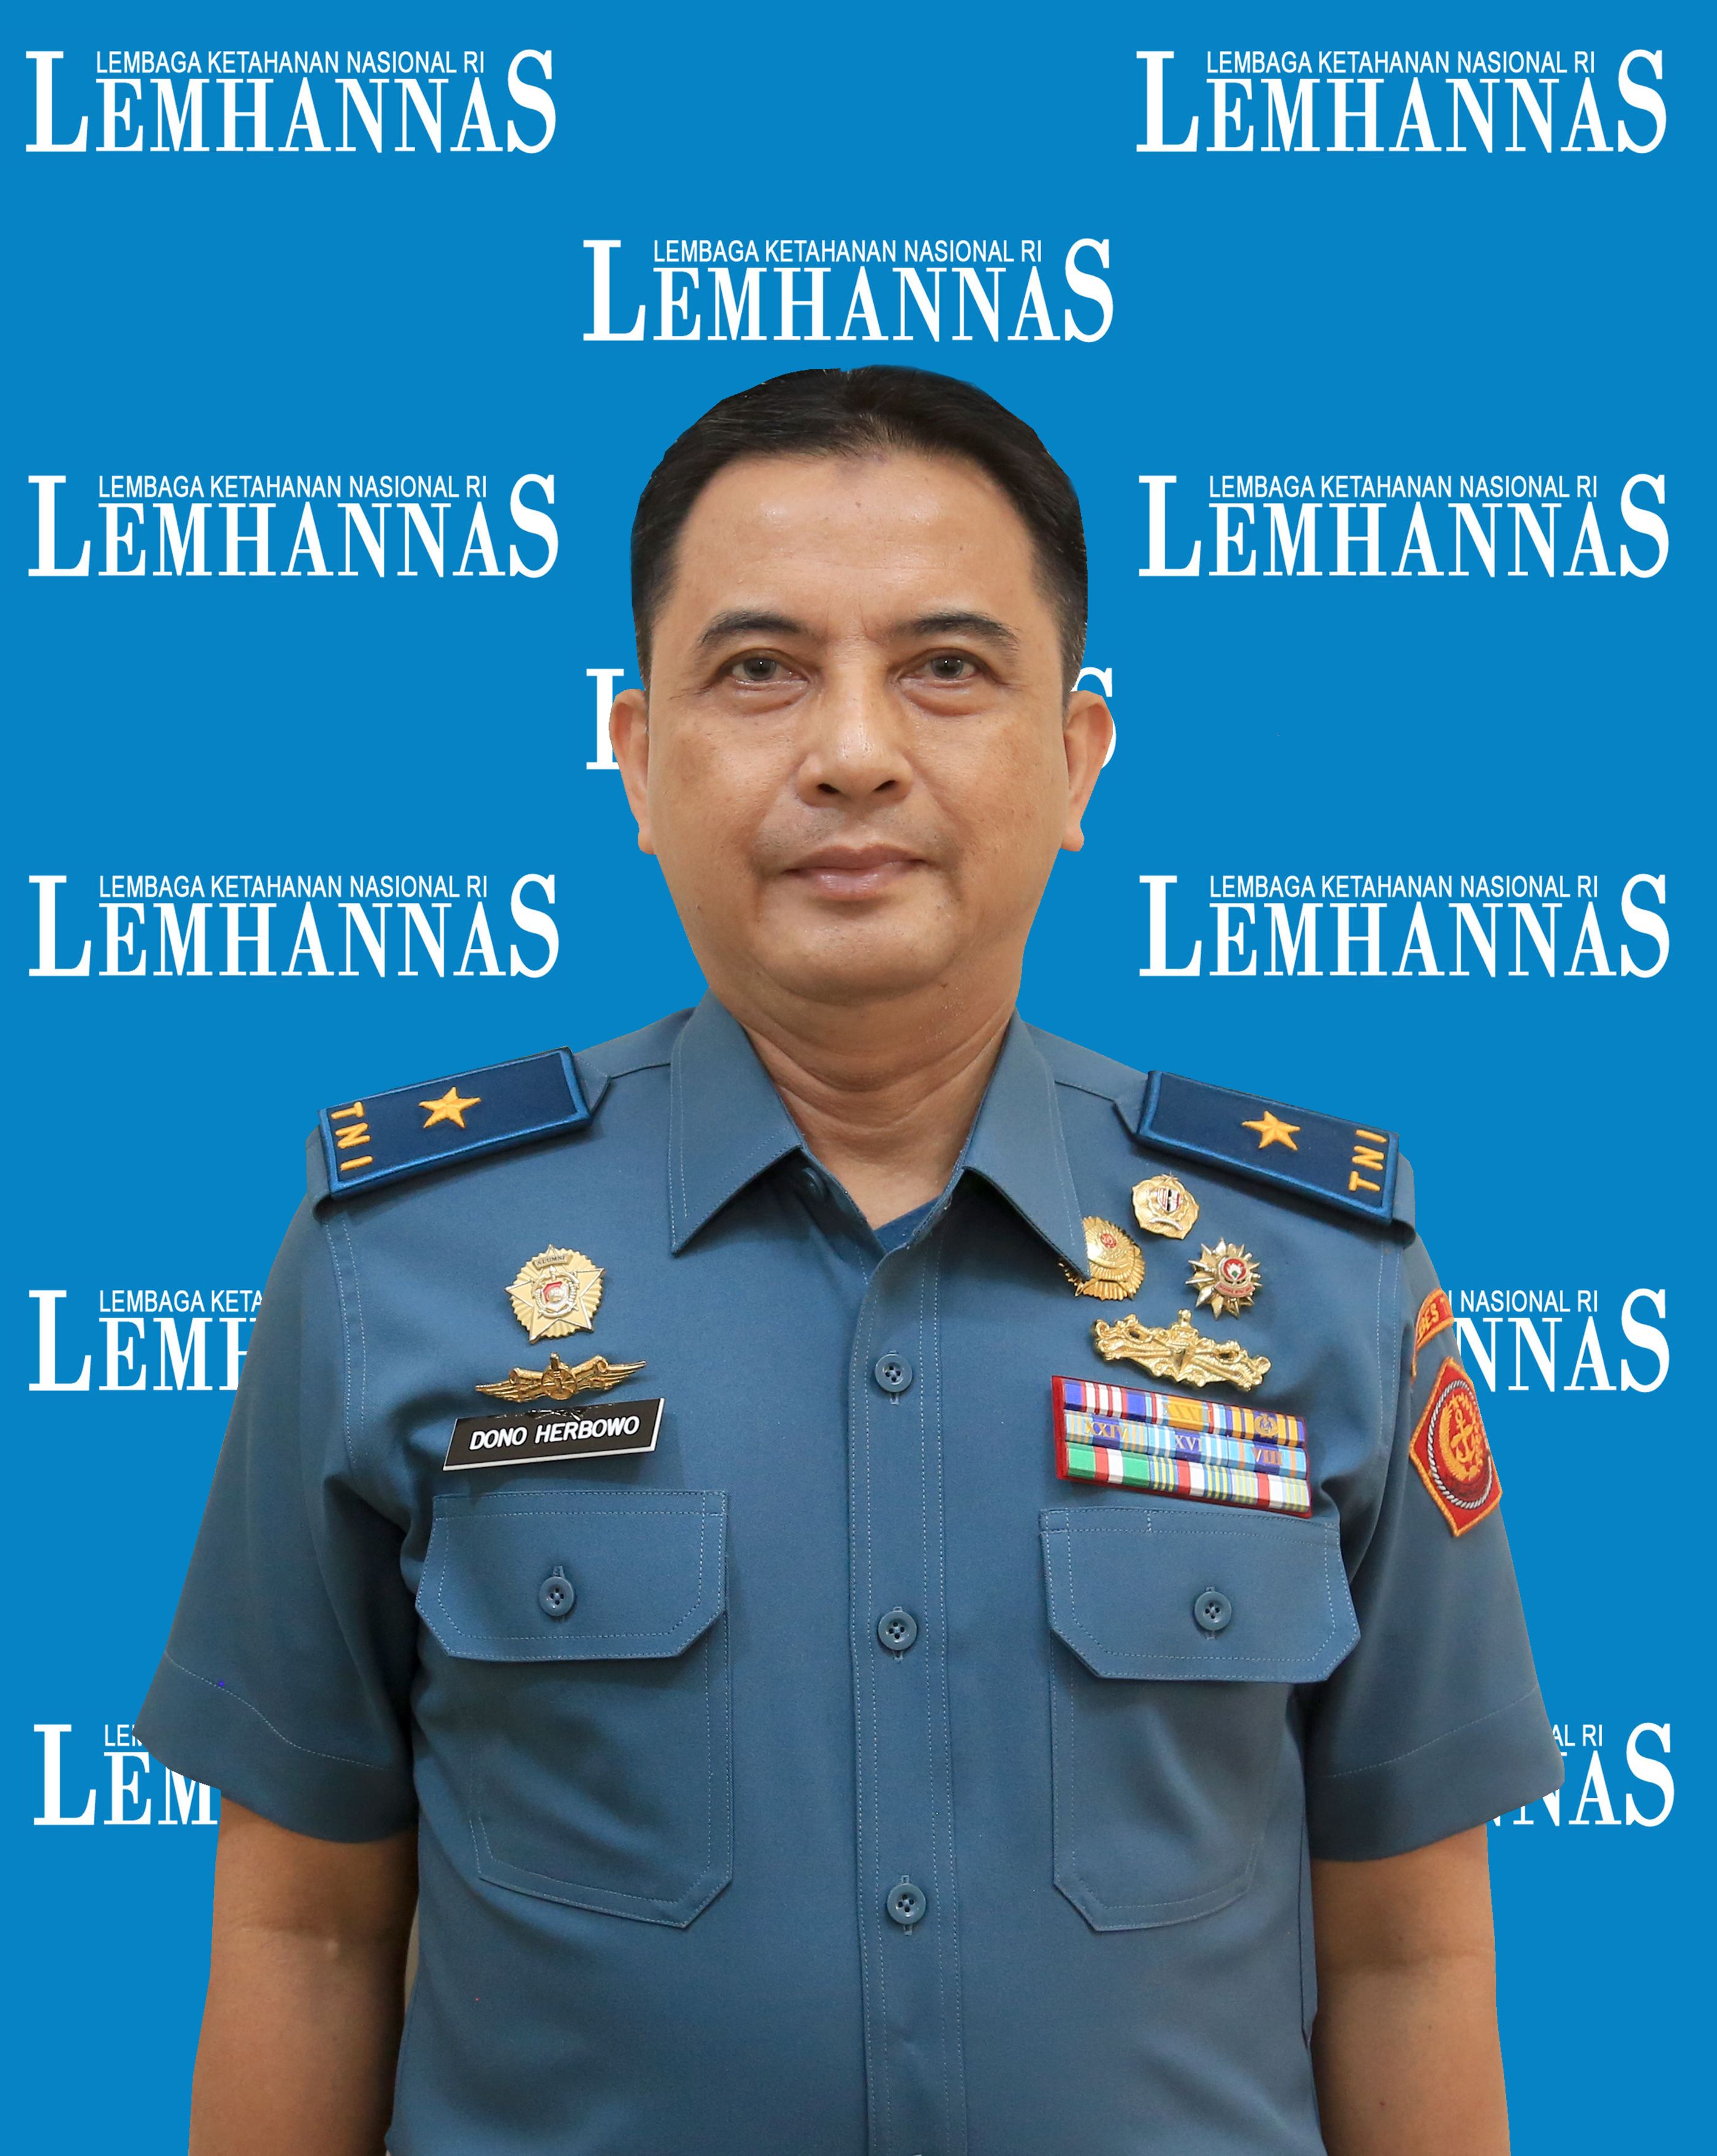 Laksma TNI Dono Herbowo, S.T., M.Tr.(Han)., CHRMP